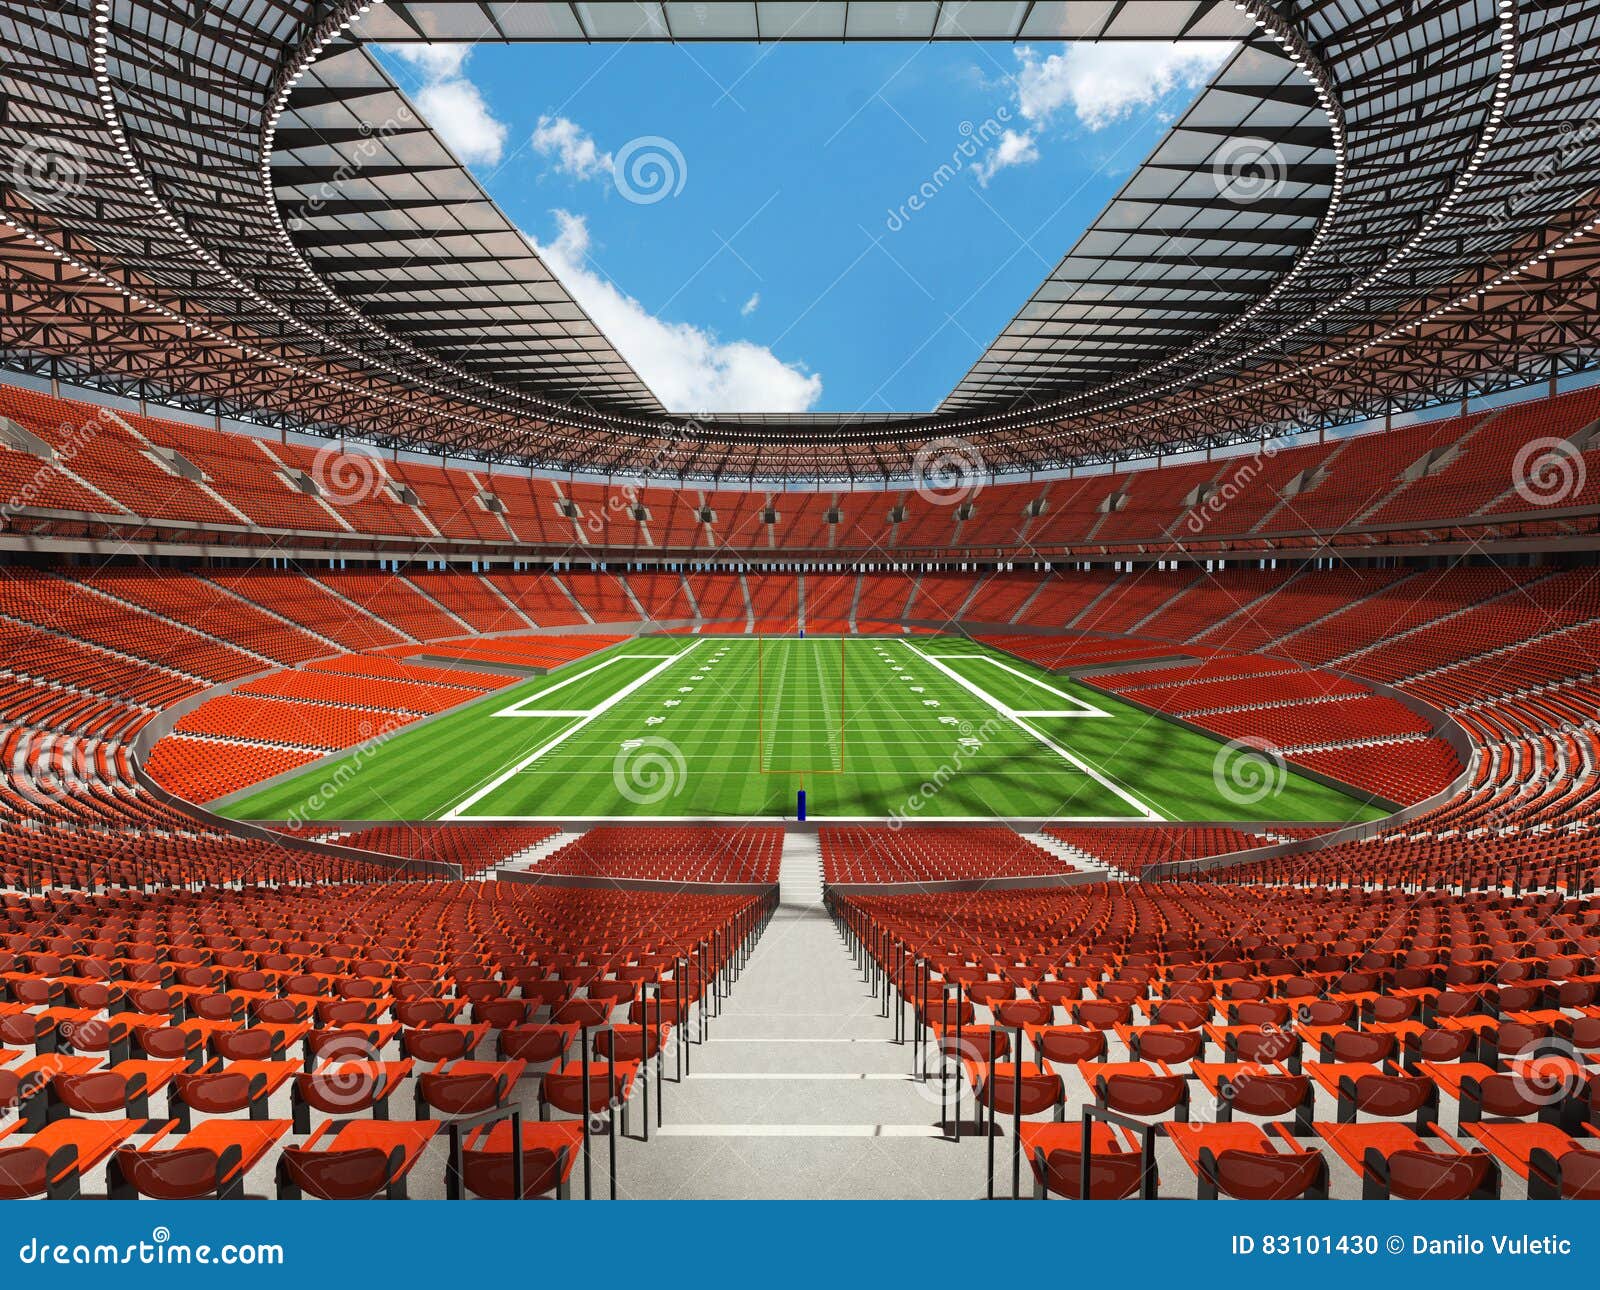 3D Render of a Round Football Stadium with Orange Seats Stock Photo